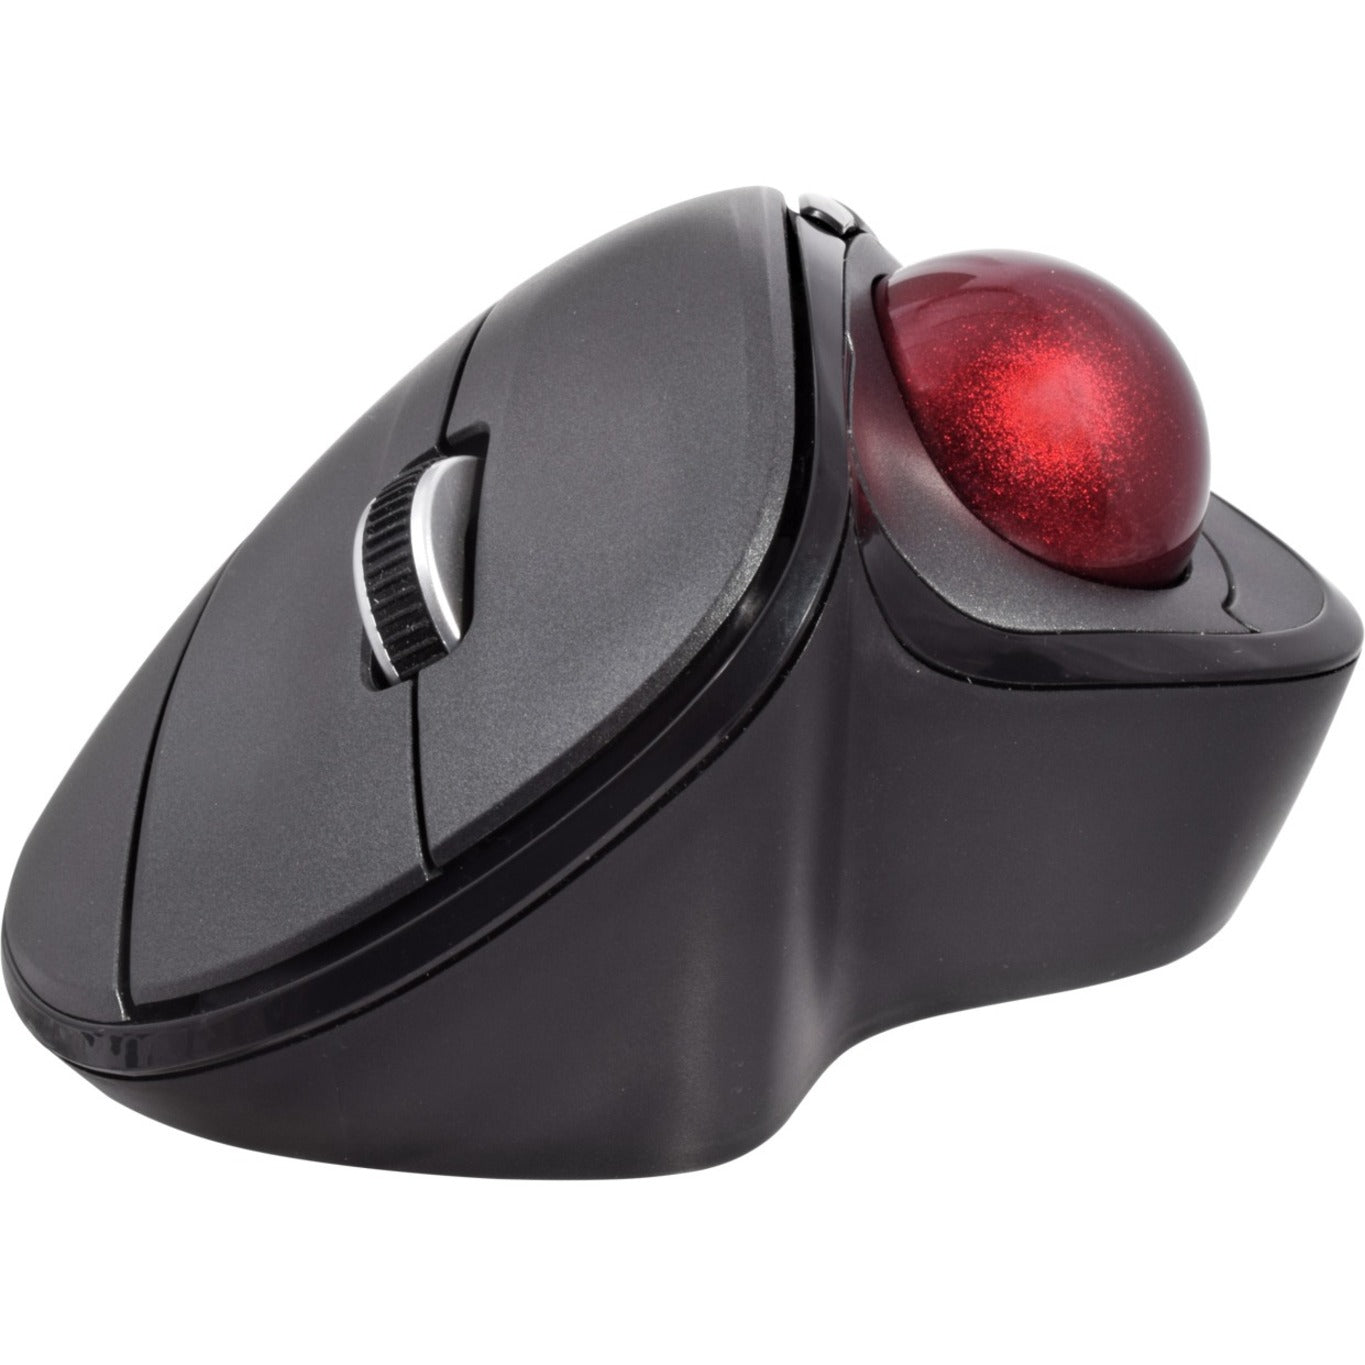 V7 Vertical Ergonomic Trackball Mouse, Wireless 6 Button Auto-speed Dpi, Ergo (MW650) Alternate-Image4 image